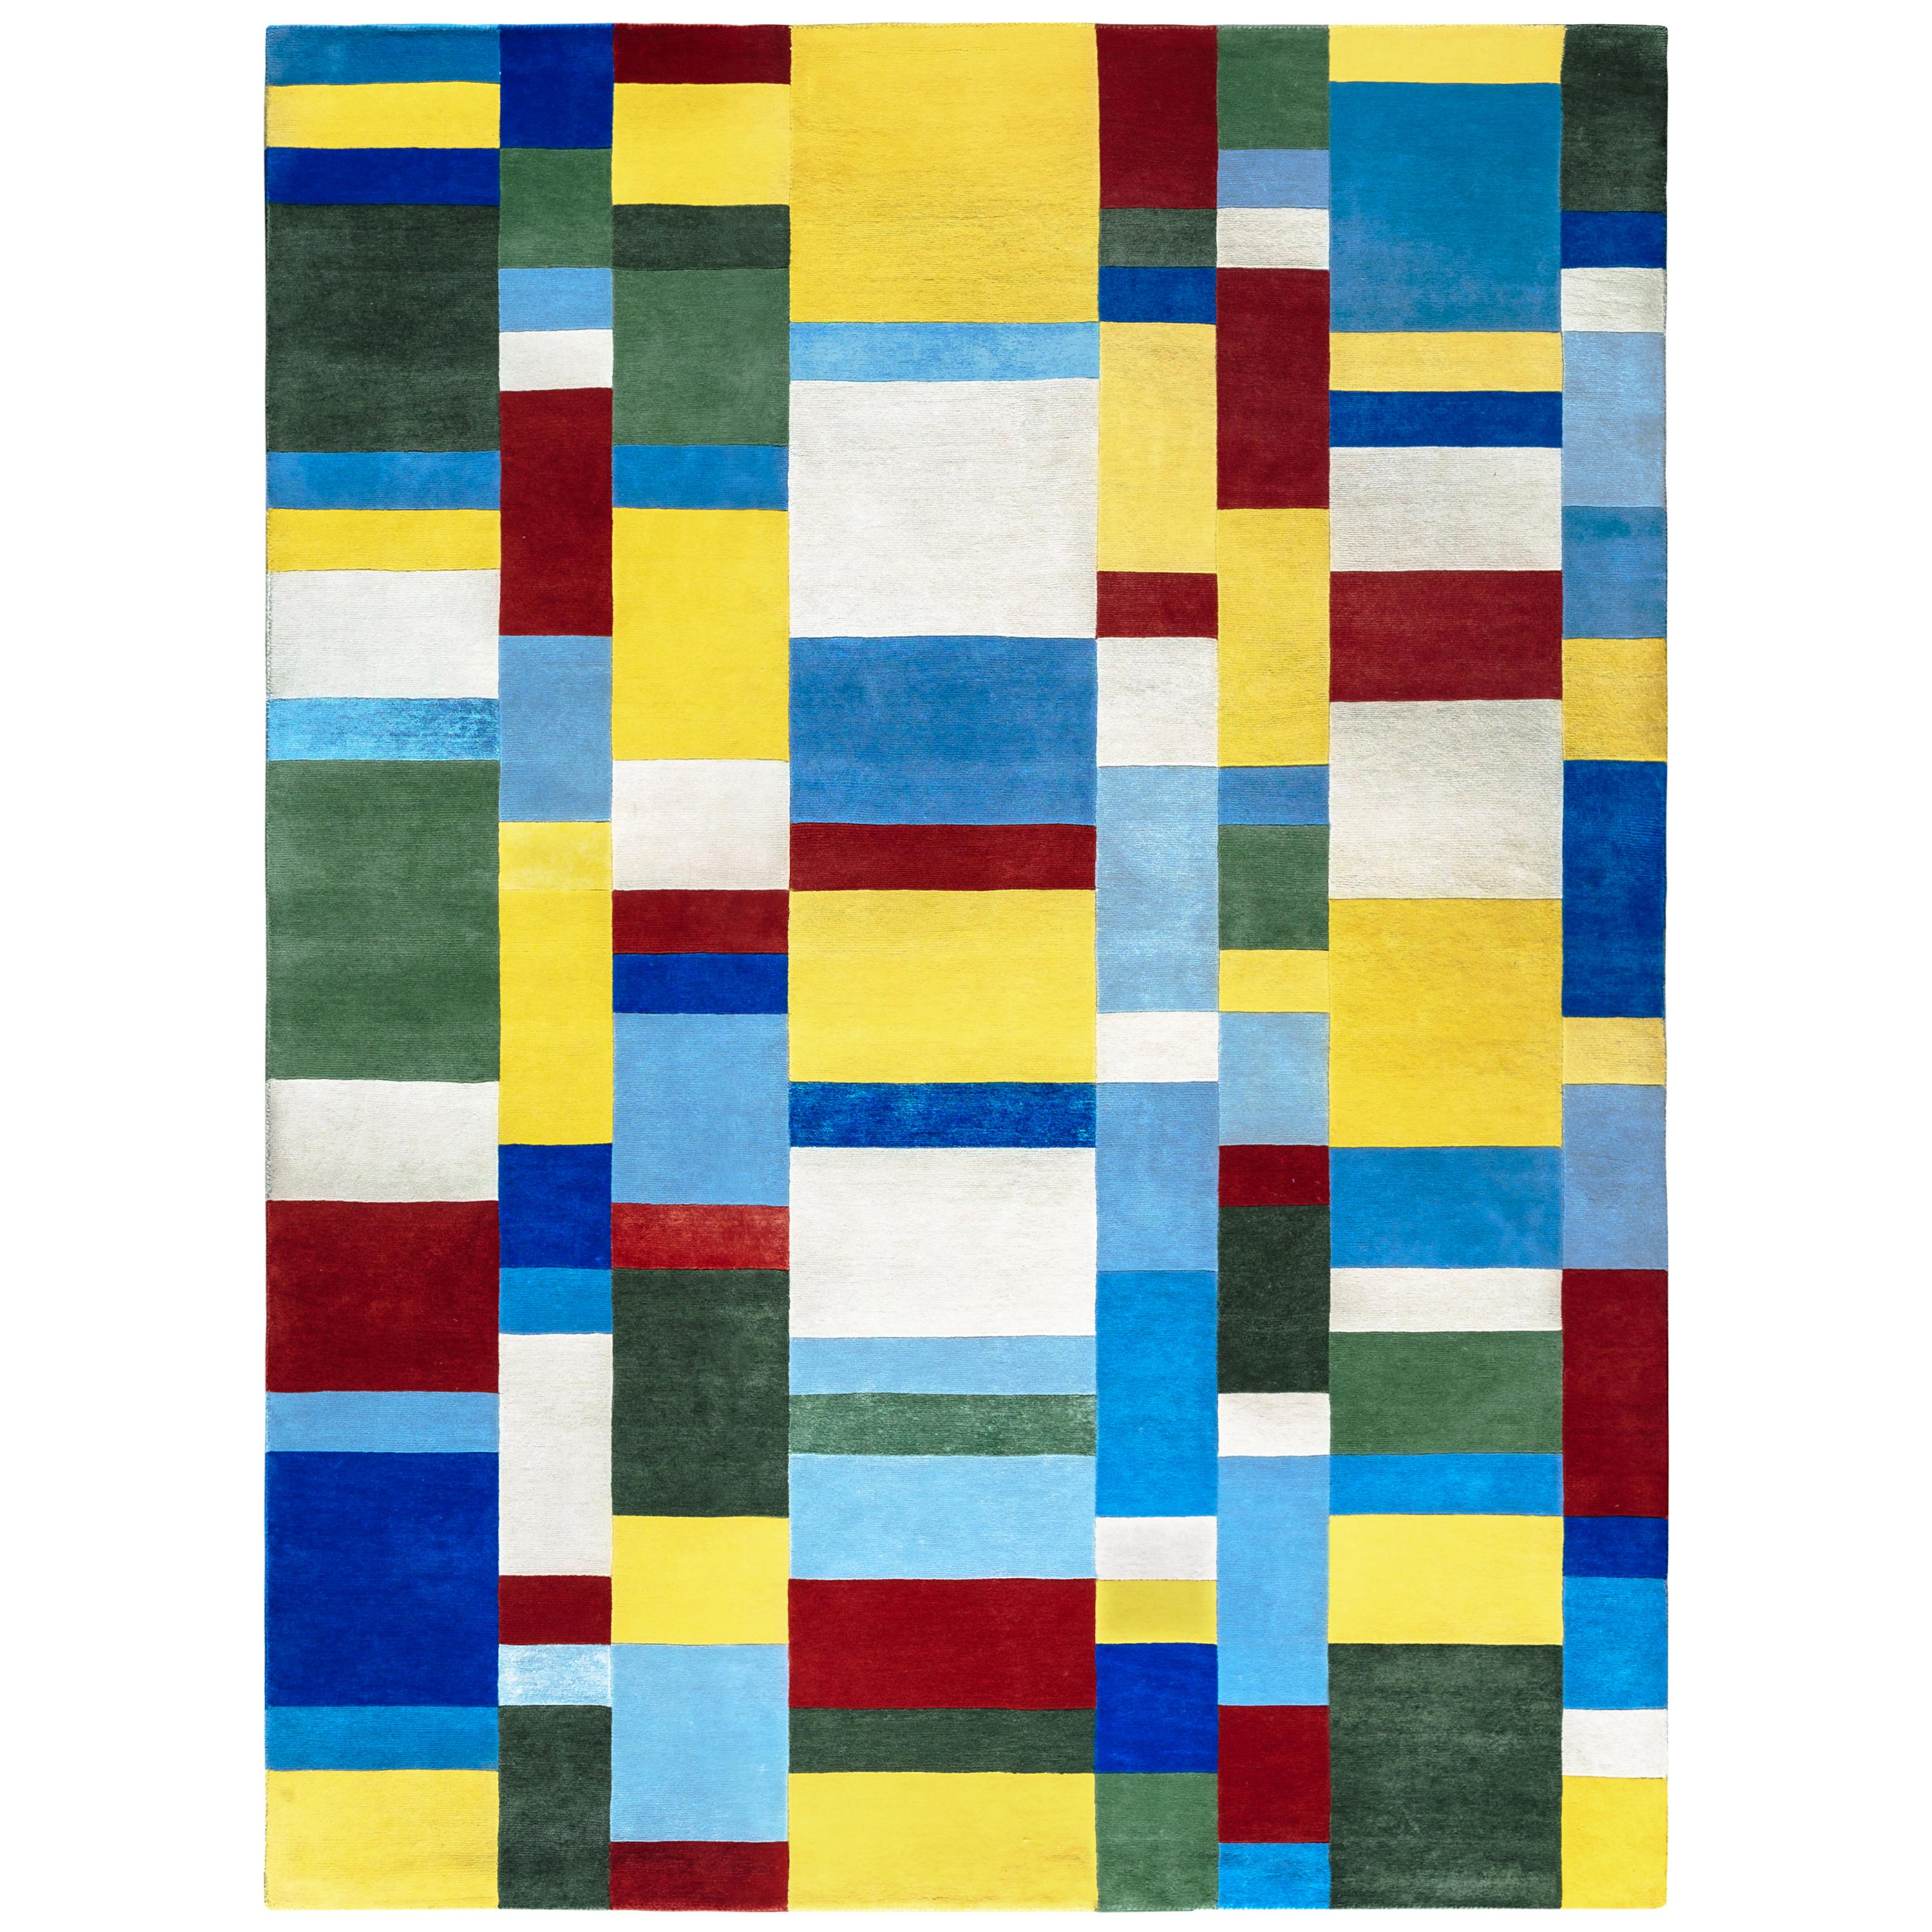 Limited Edition Tapestry/Rug "Los Colores Del Español" by J. Zanella For Sale